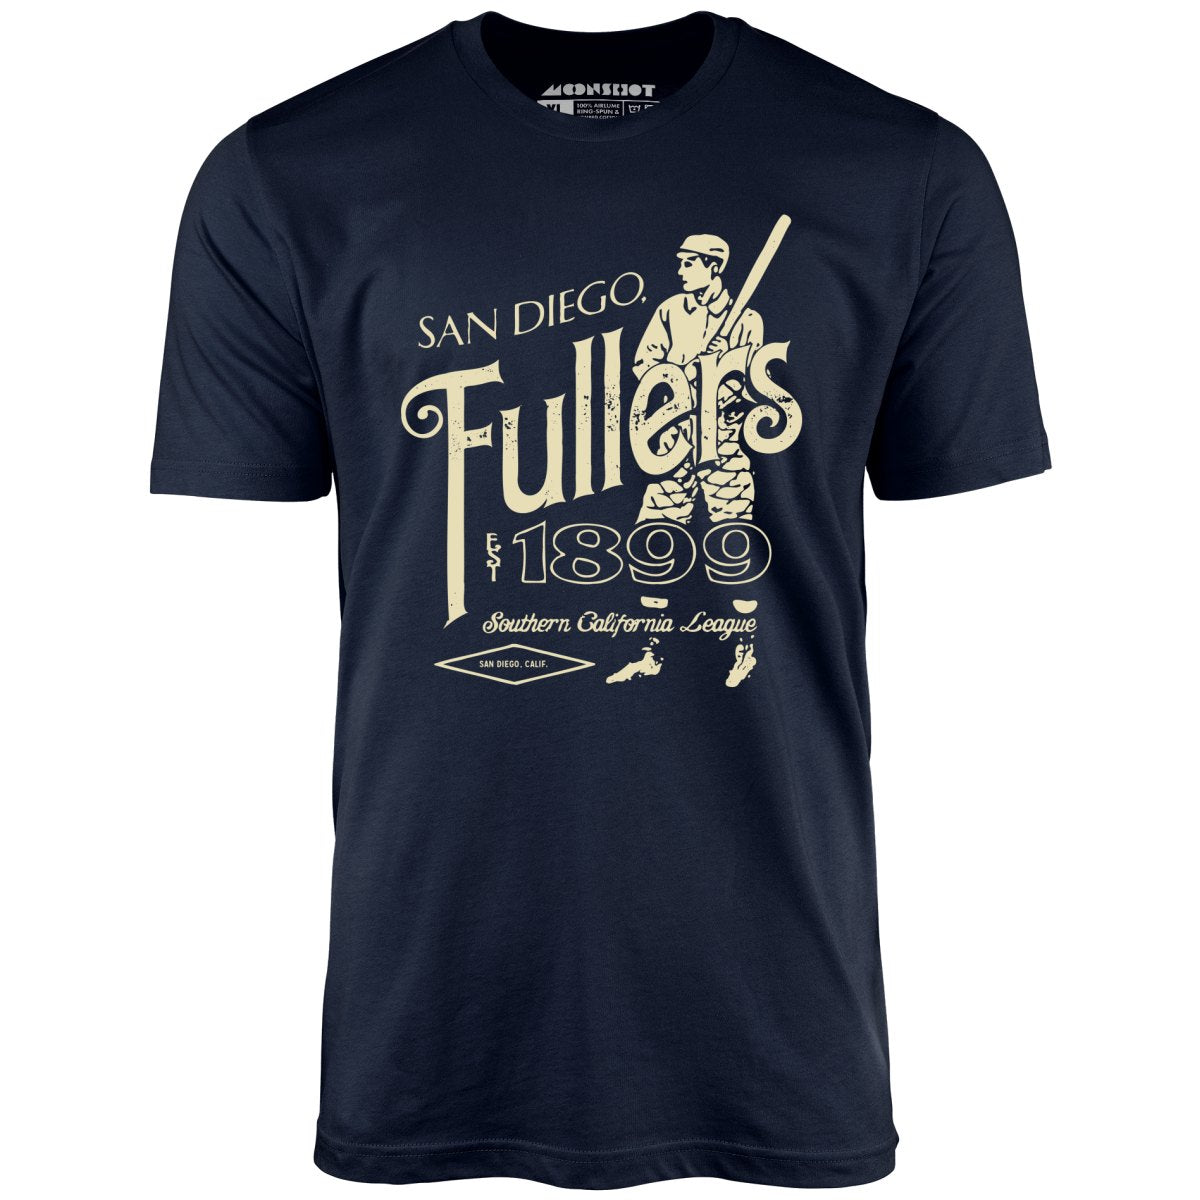 San Diego Fullers - California - Vintage Defunct Baseball Teams - Unisex T-Shirt